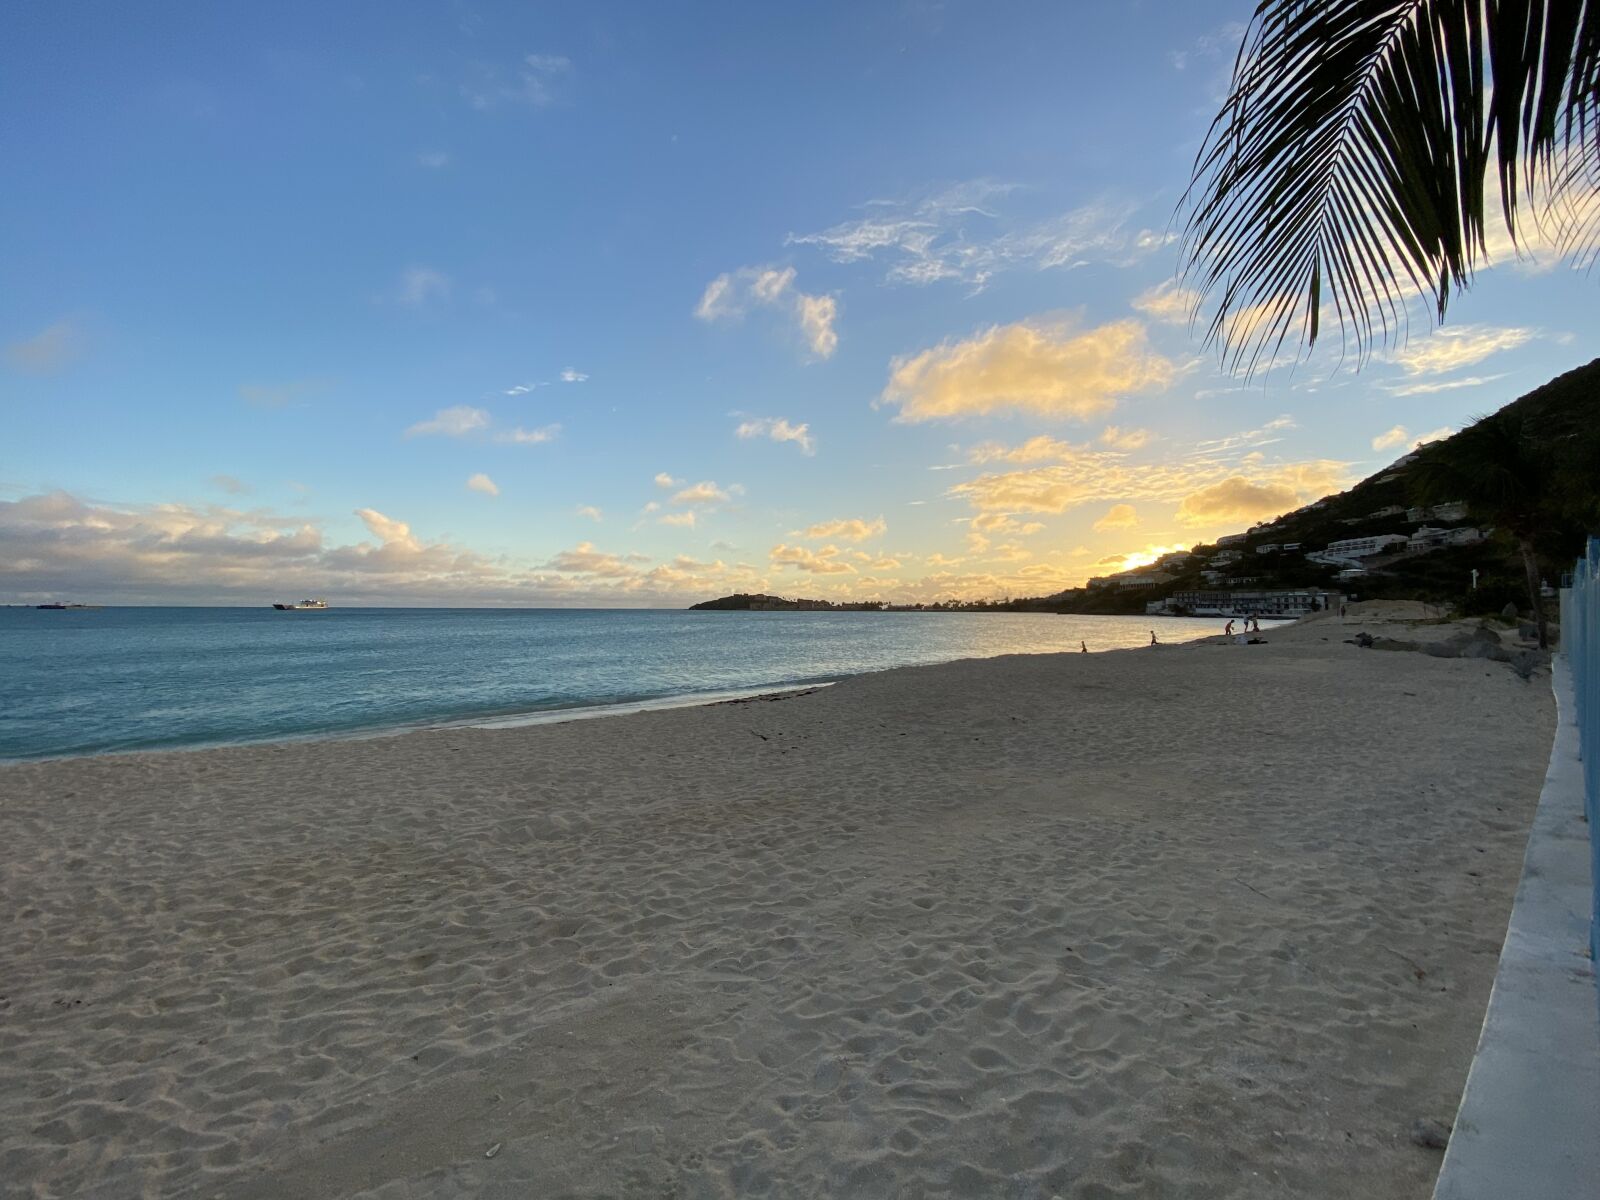 Apple iPhone 11 Pro + iPhone 11 Pro back triple camera 1.54mm f/2.4 sample photo. Beach, sunrise, palmleaf photography